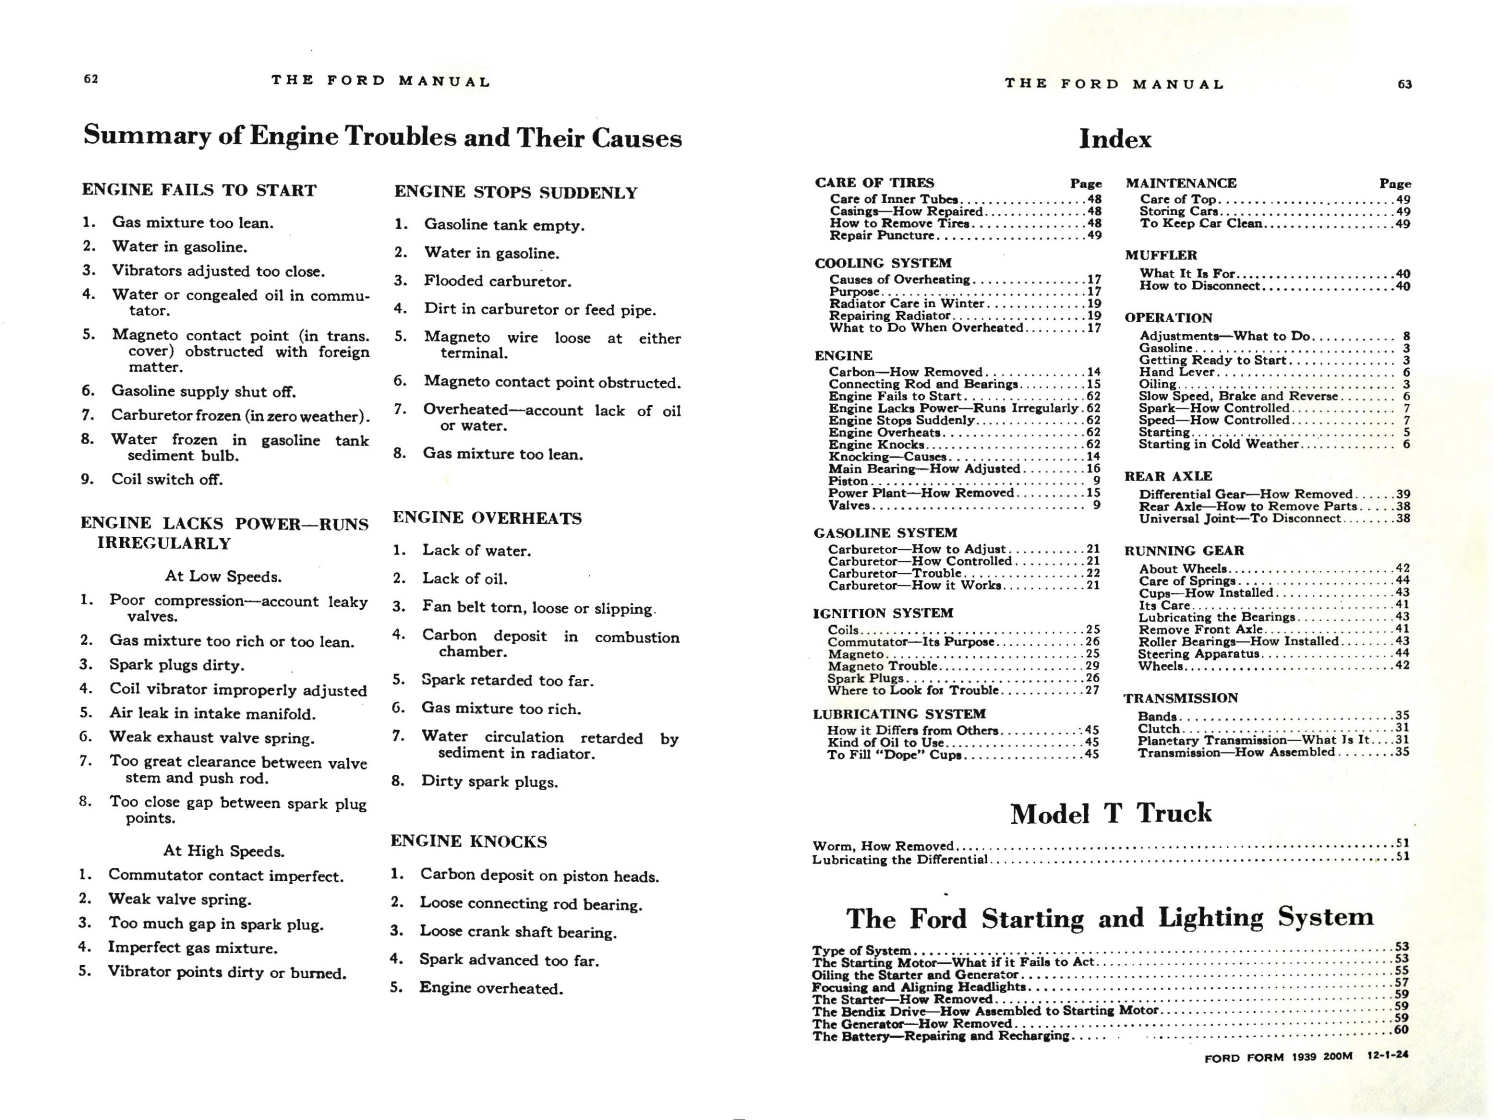 n_1924 Ford Owners Manual-62-63.jpg